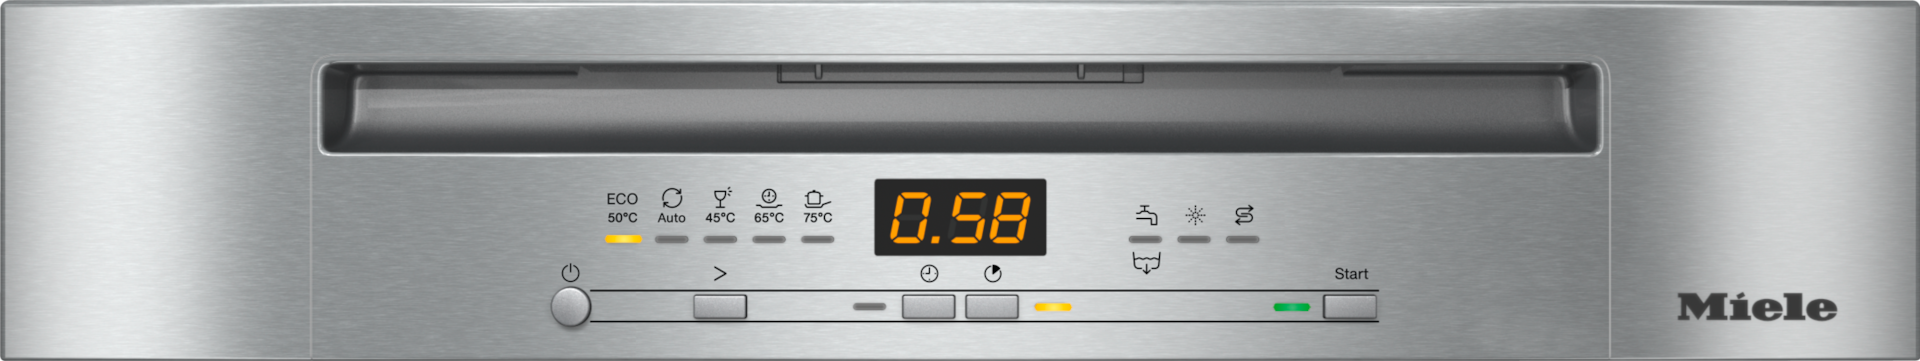 Lave-vaisselle - G 5210 SCi Active Plus Inox CleanSteel - 3